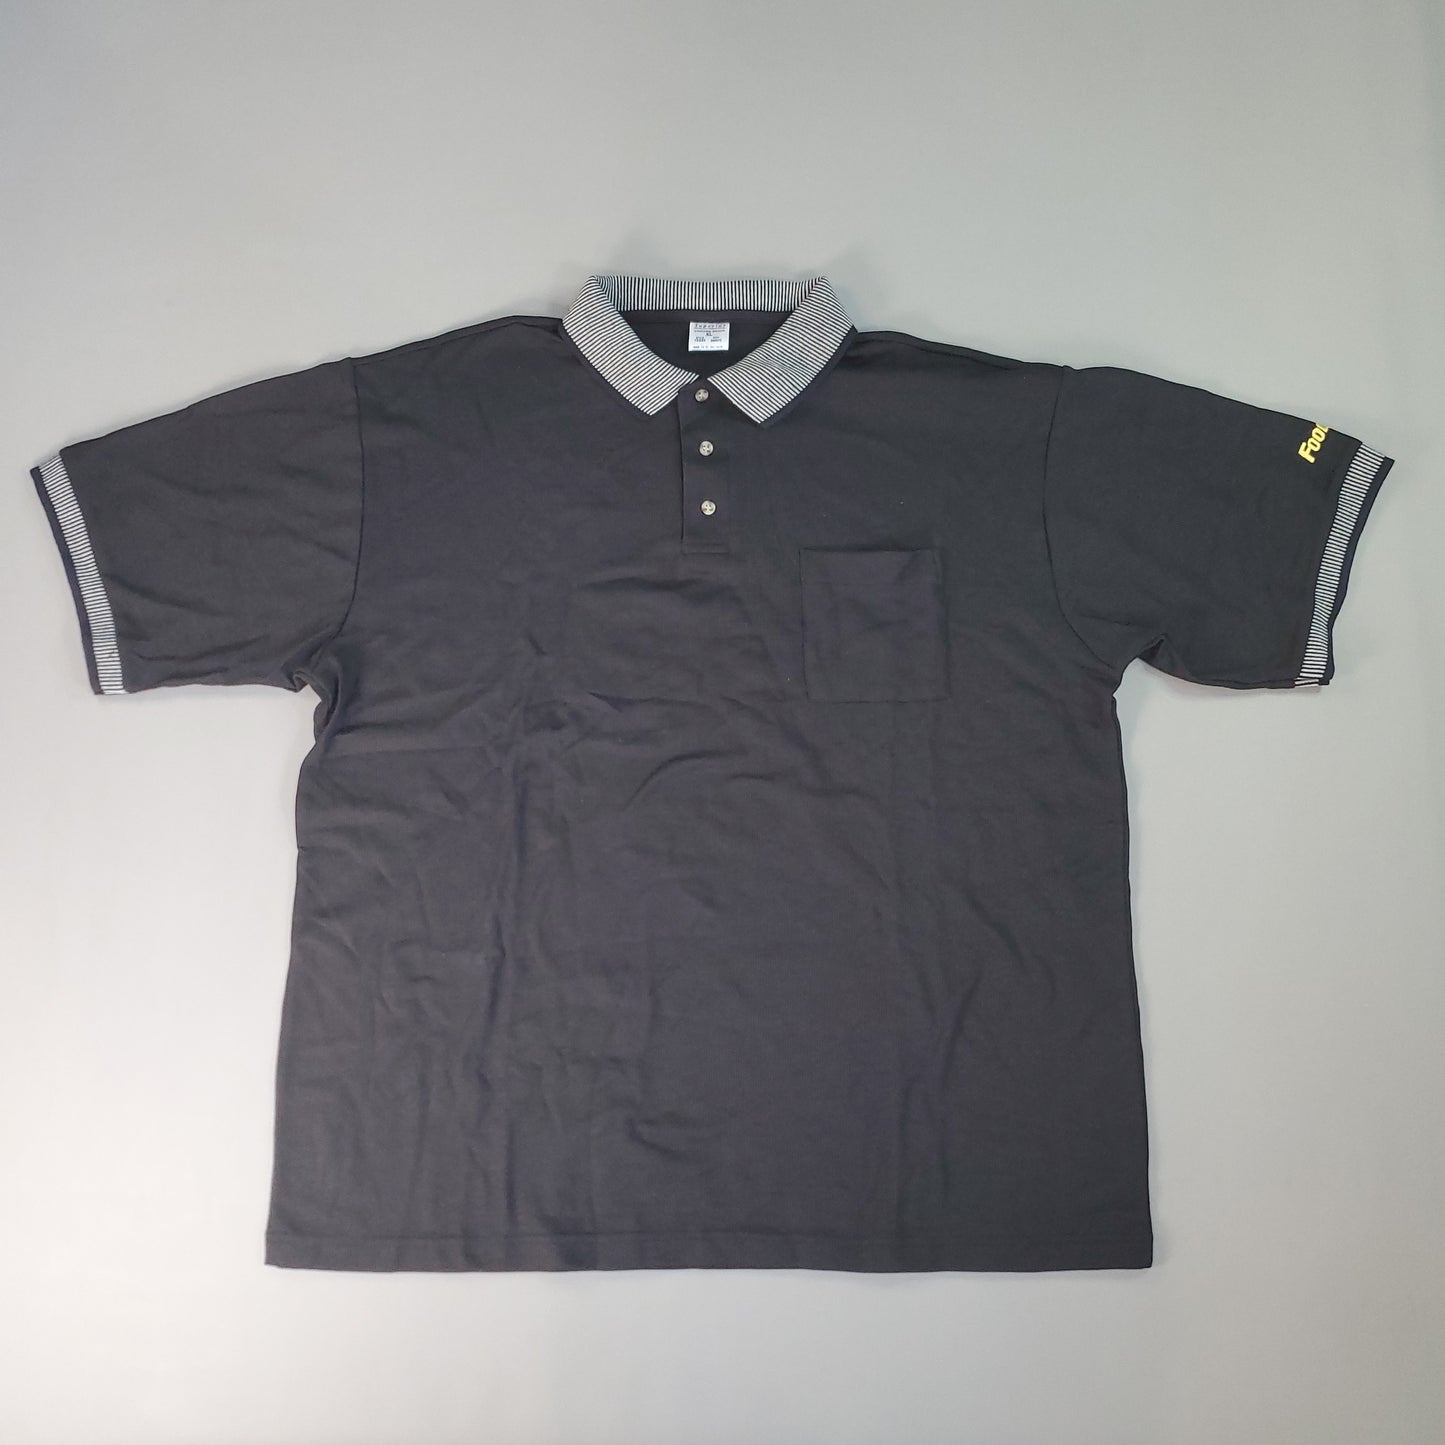 FOOD 4 LESS Employee Staff Uniform Polo SS Shirt Men's Sz XL Black 72935 (New)